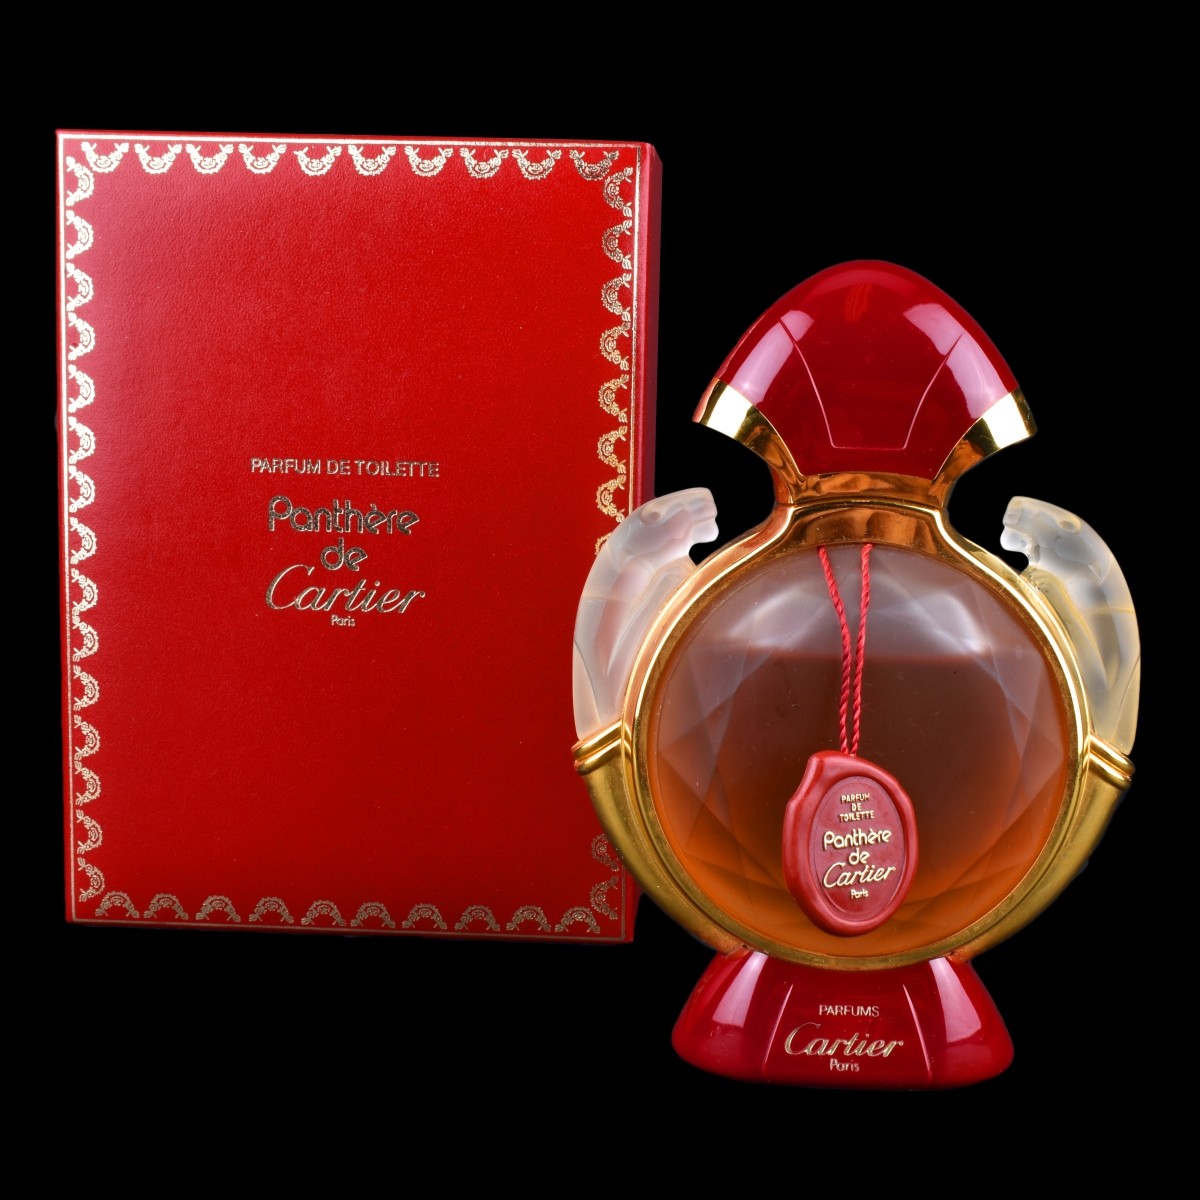 Vintage Cartier "Panthere" Perfume in Original Box